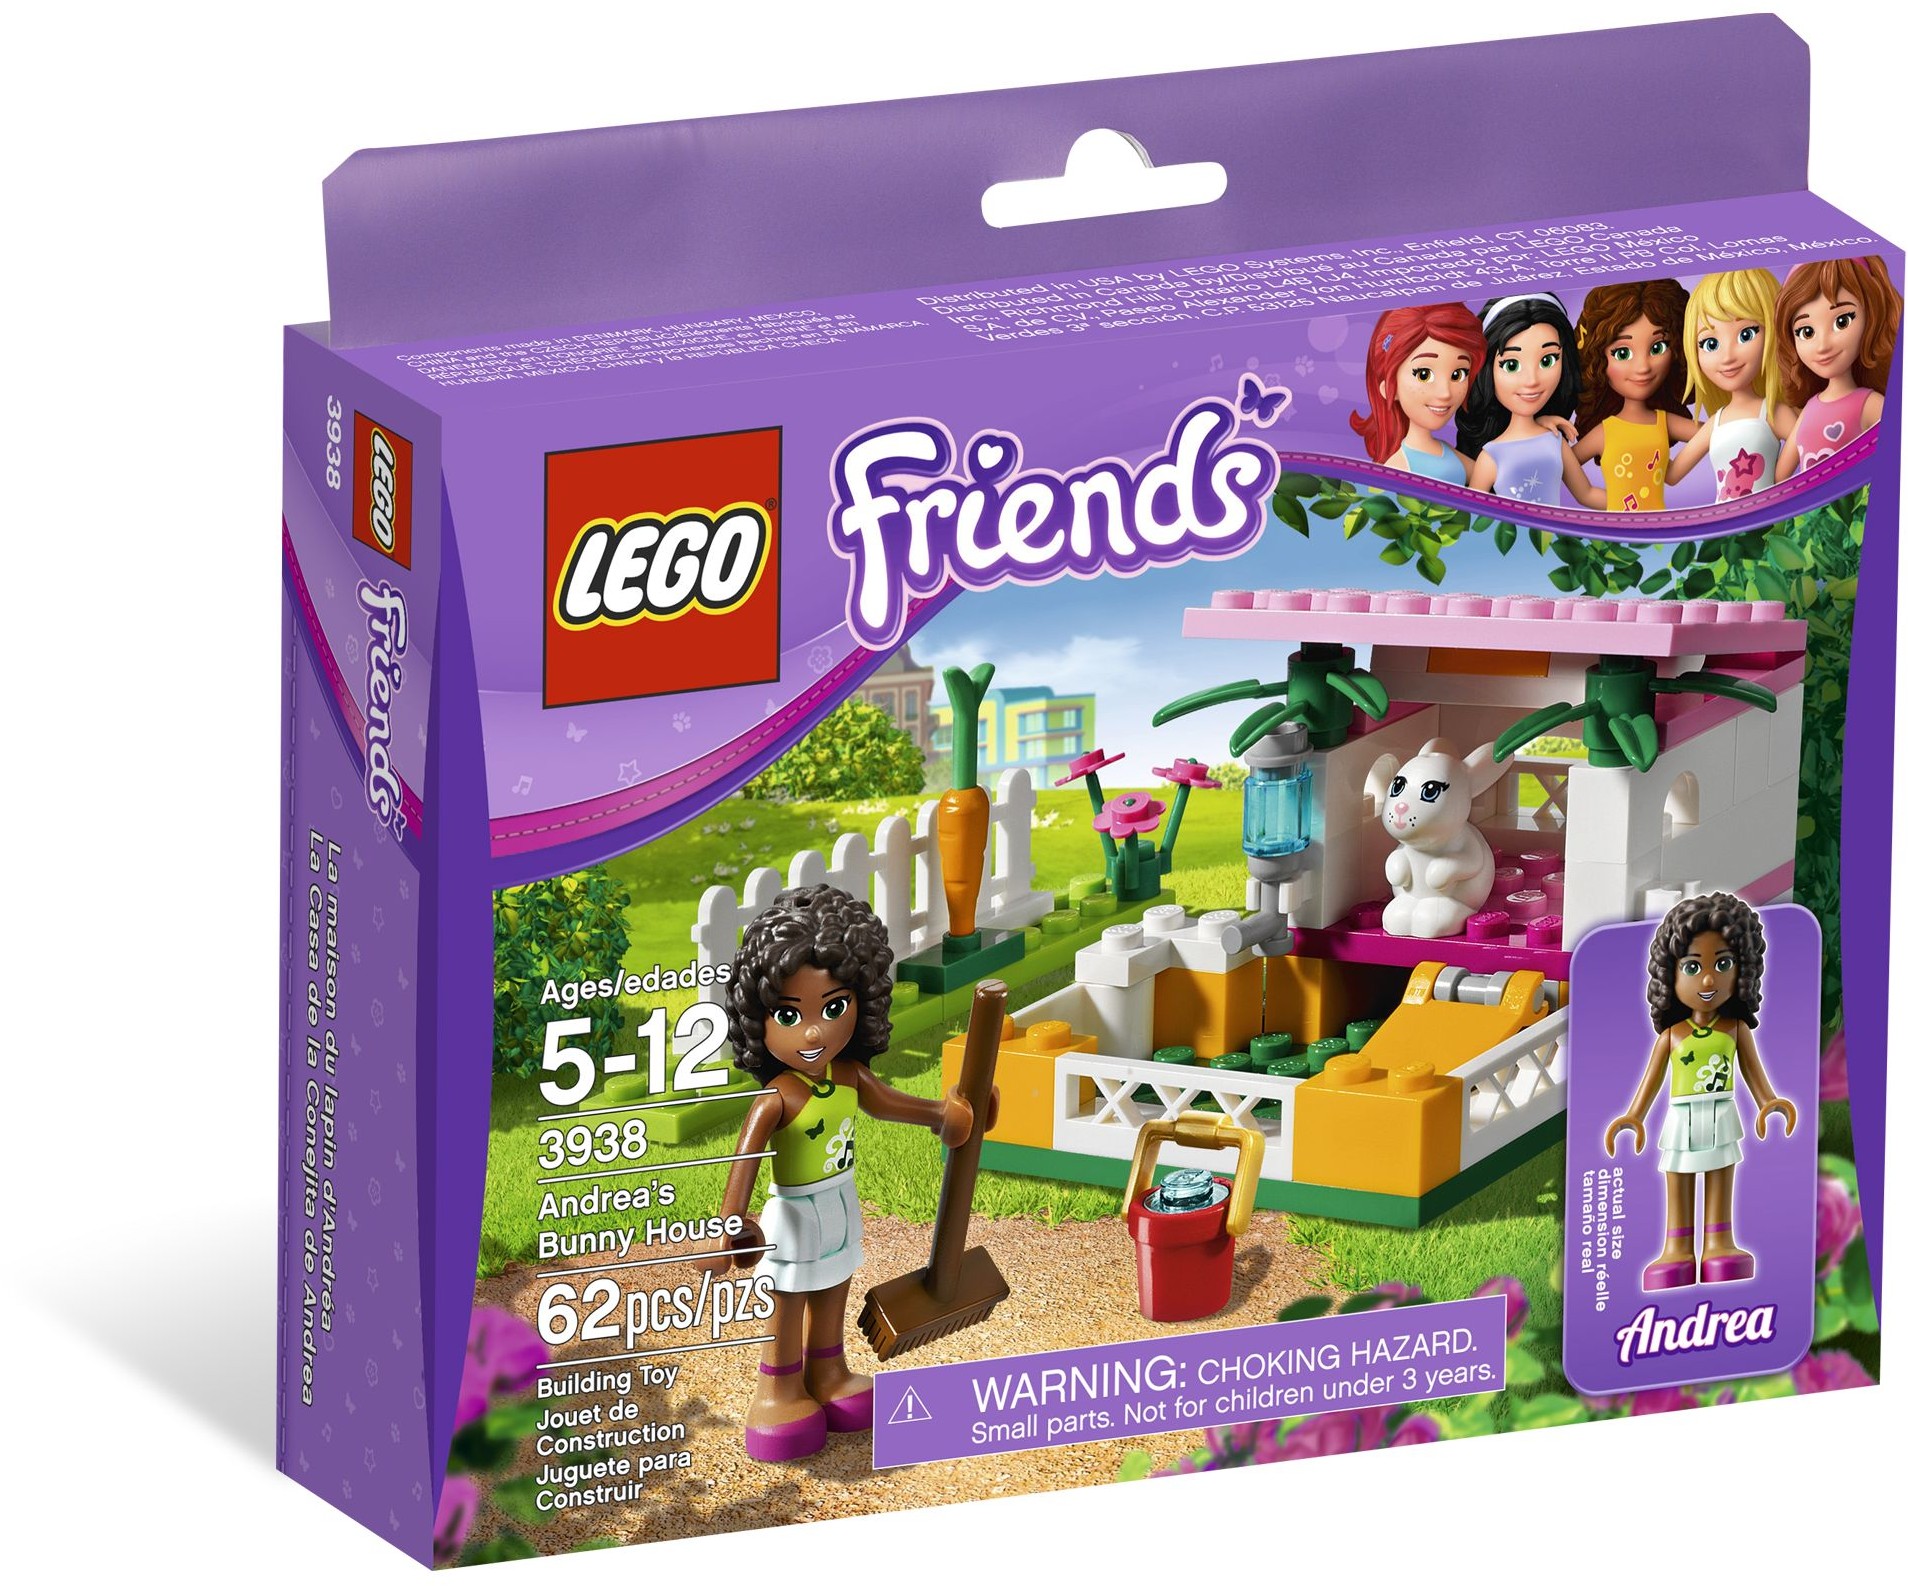 Andrea's Bunny House (3938) | LEGO Friends Wiki | Fandom